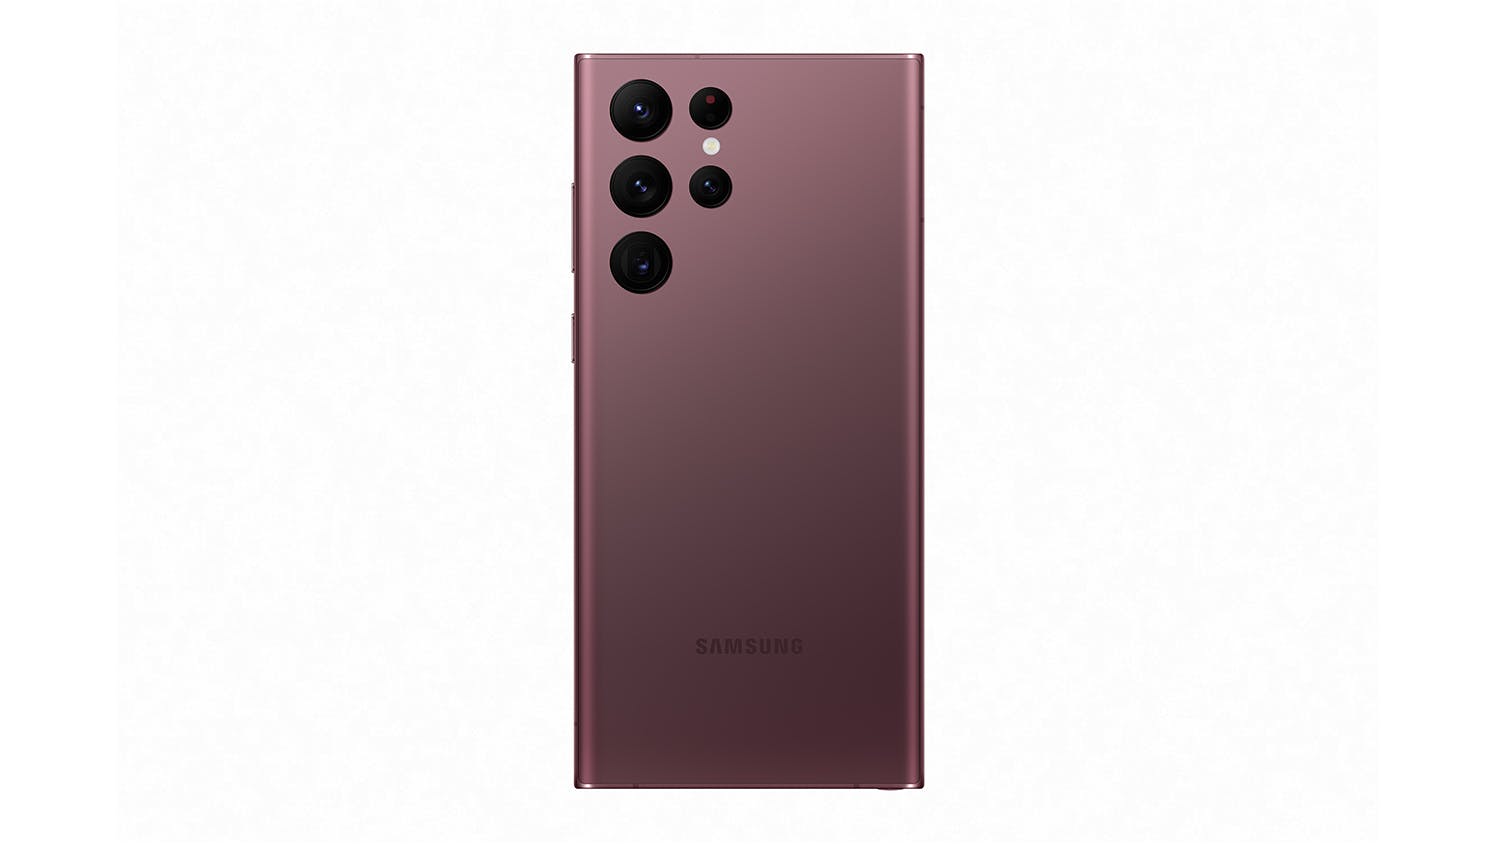 Samsung Galaxy S22 Ultra 5G 128GB Smartphone - Burgundy (Spark/Open Network)